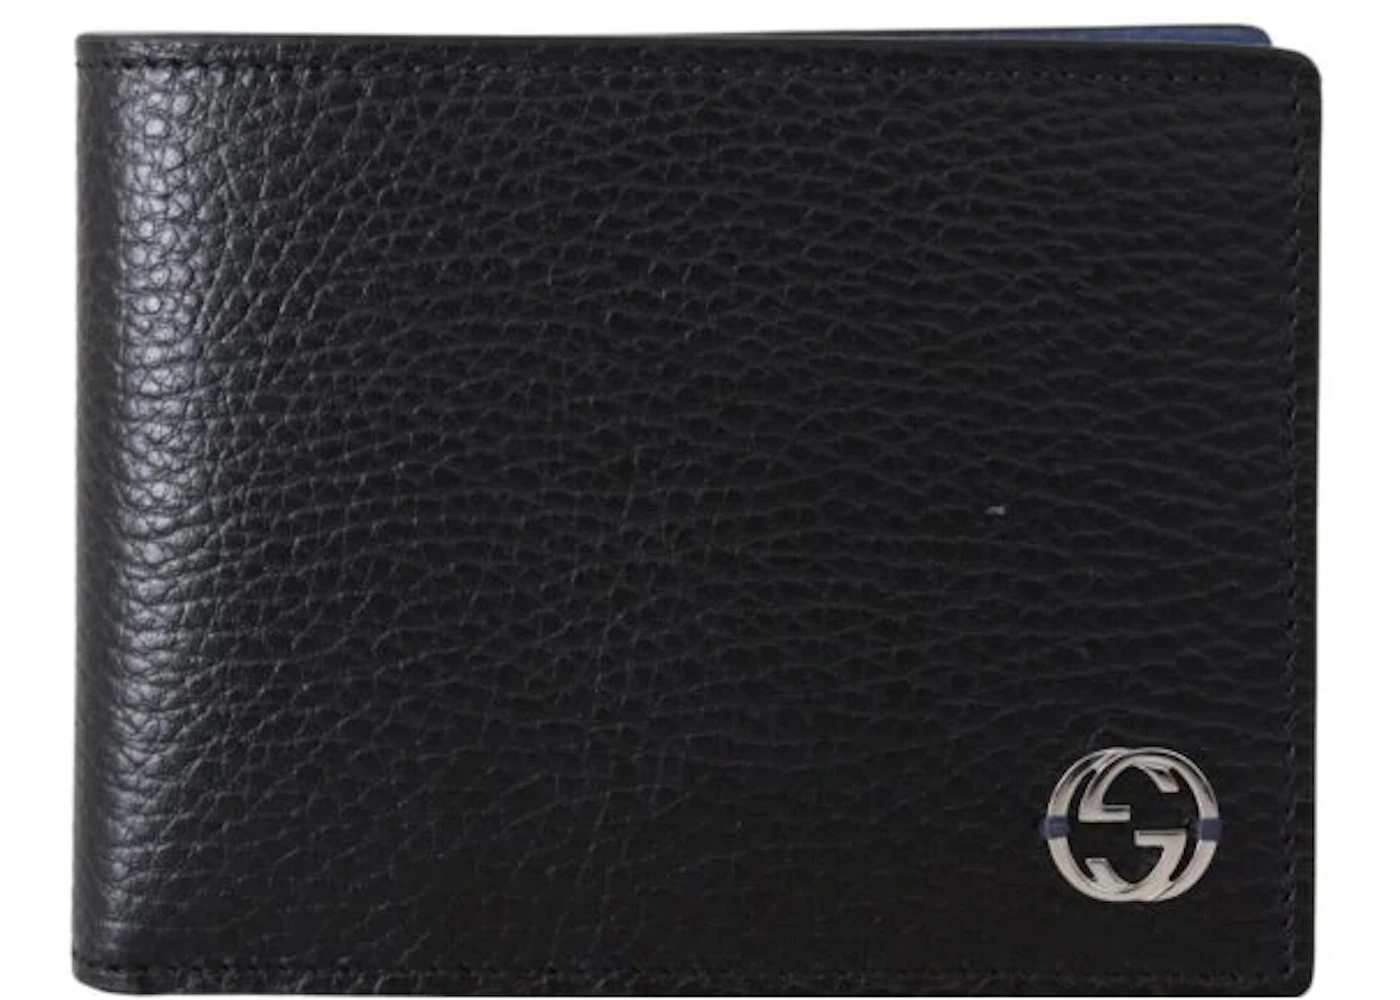 Gucci Interlocked GG Bifold Wallet Black/Blue in Leather - US